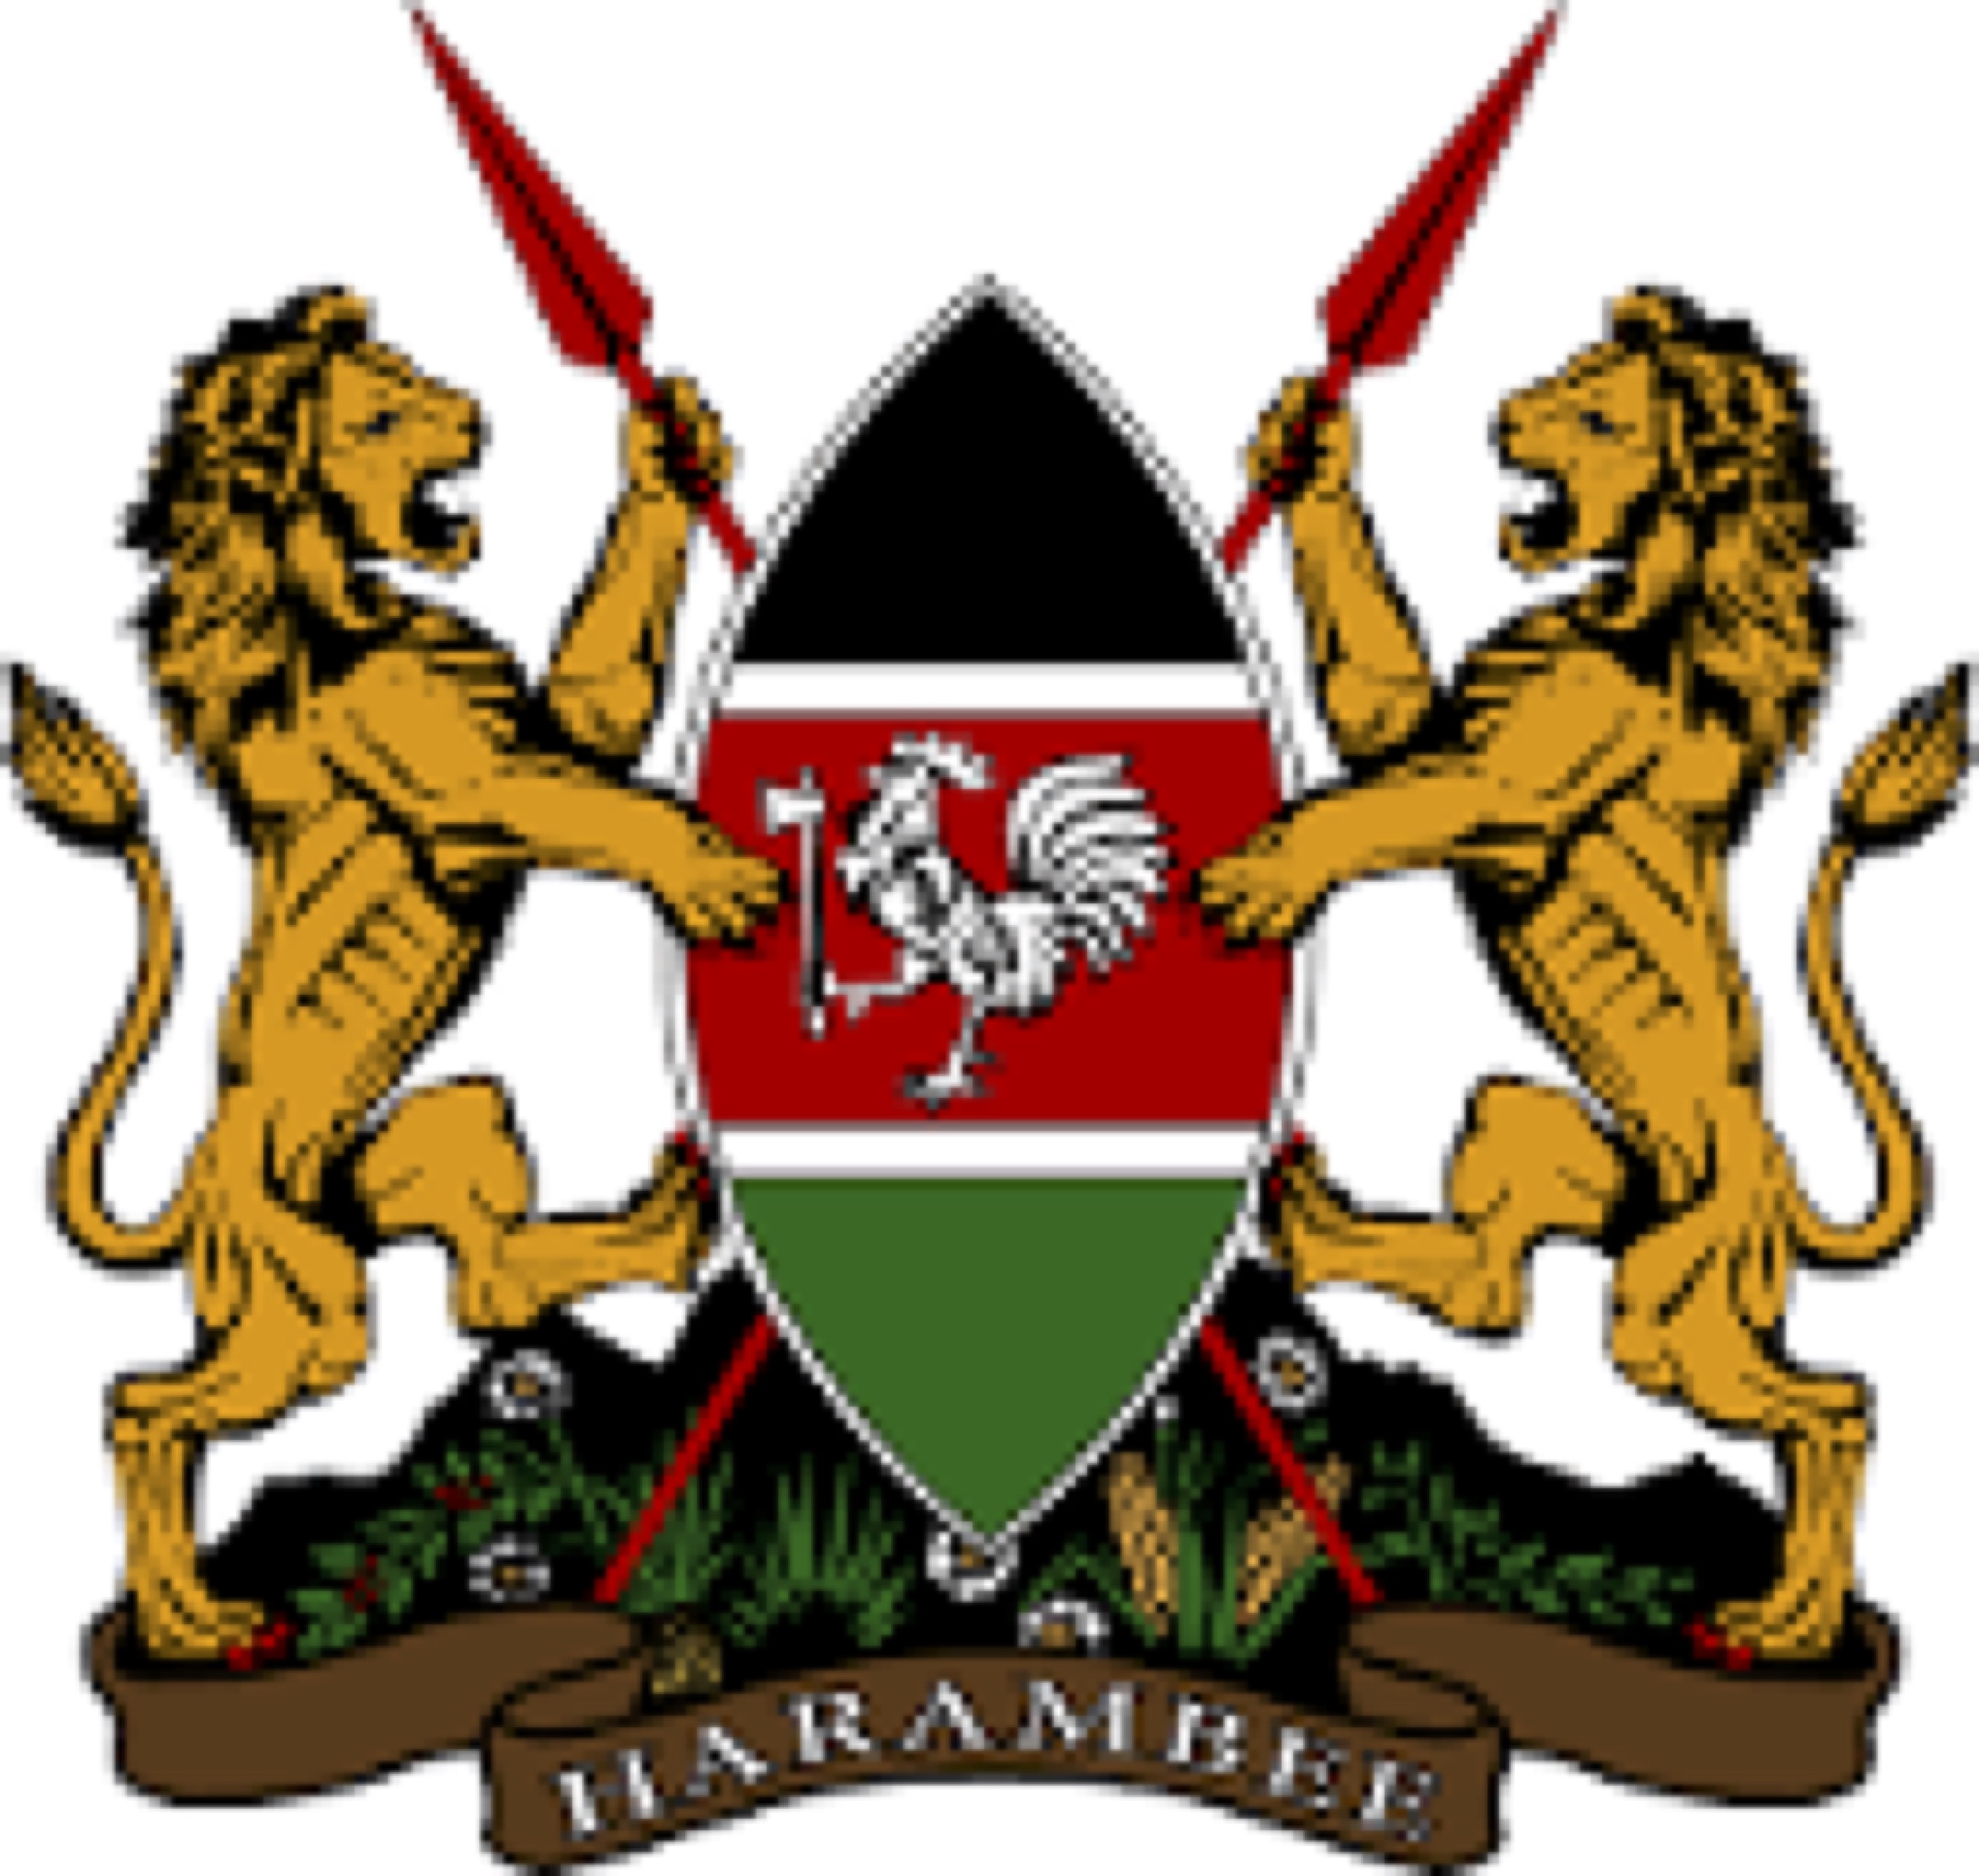 Government of Kenya's logo